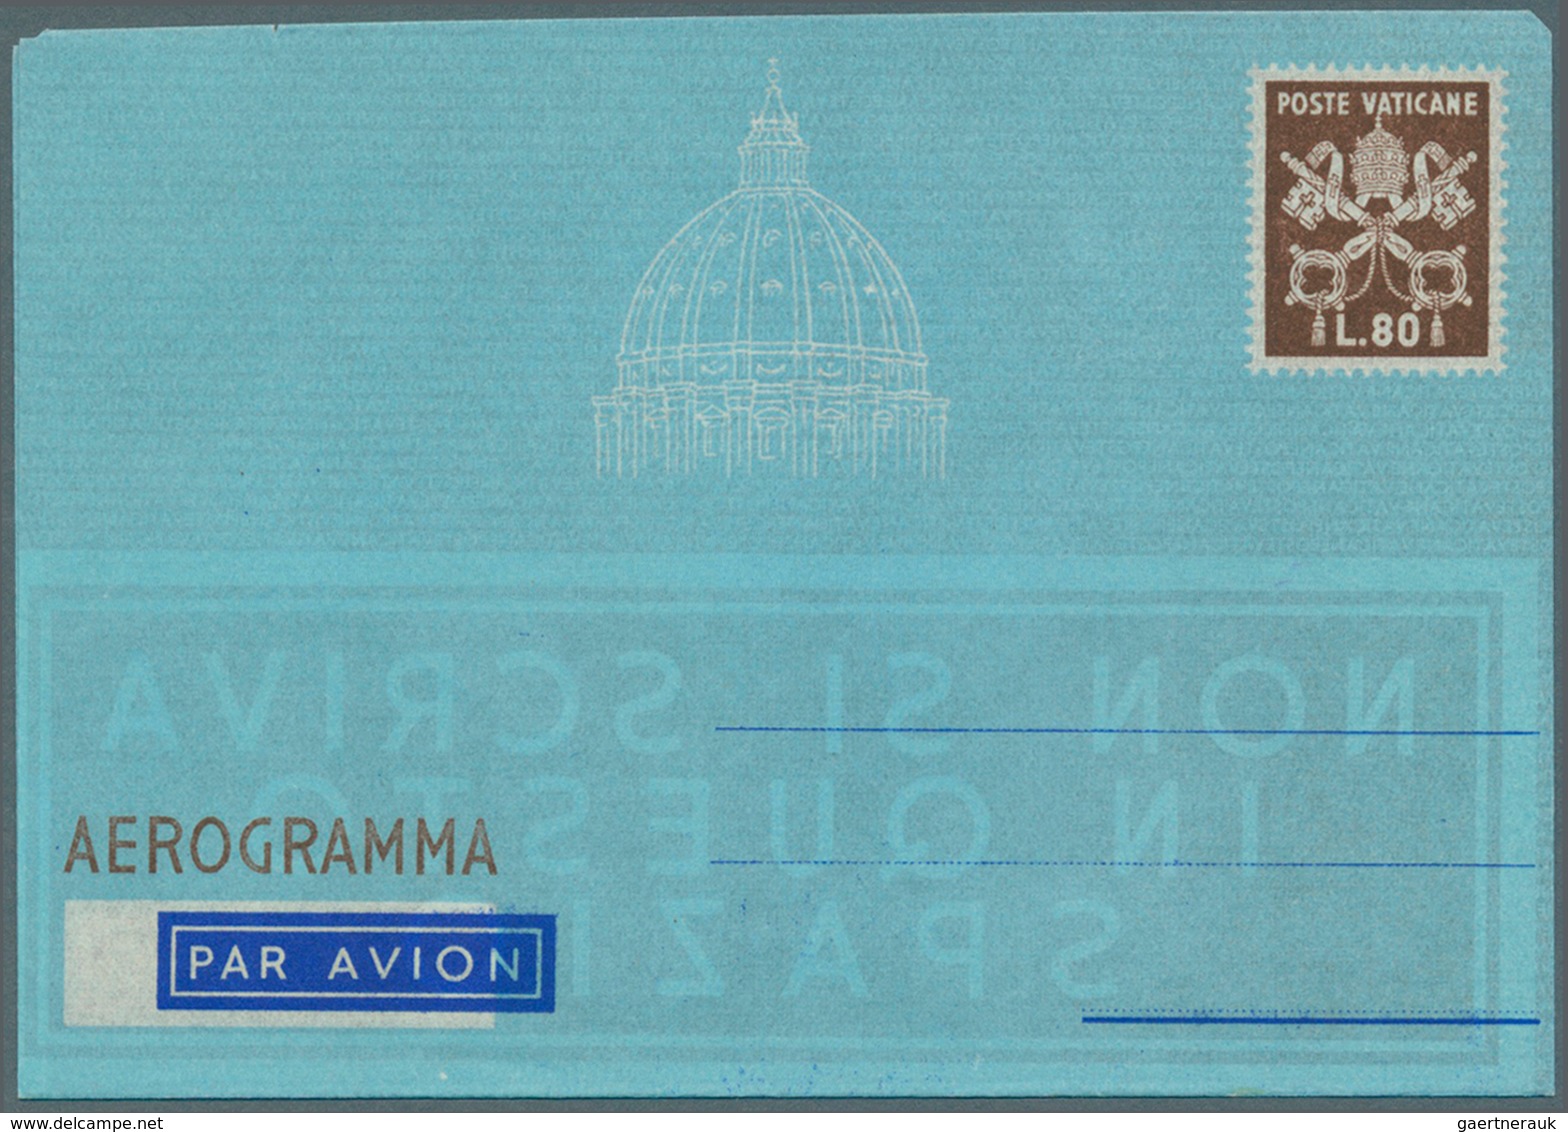 Vatikan - Ganzsachen: 1951, Aerogramme Of The Vatican L. 80 "AEROGRAMMA" Brown, Unused. Unlisted Var - Ganzsachen